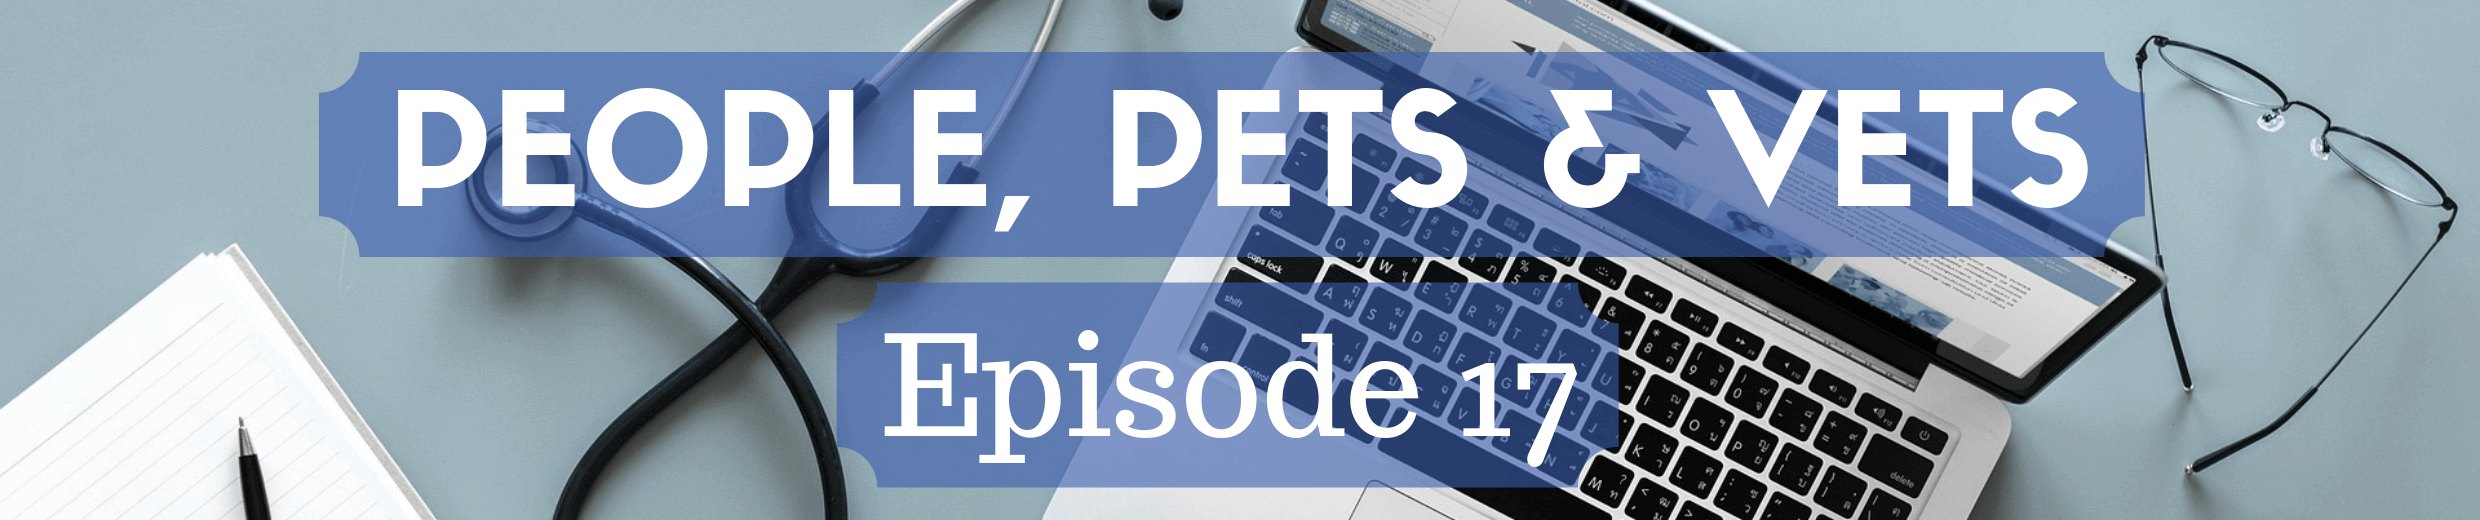 People, Pets & Vets: Episode 17